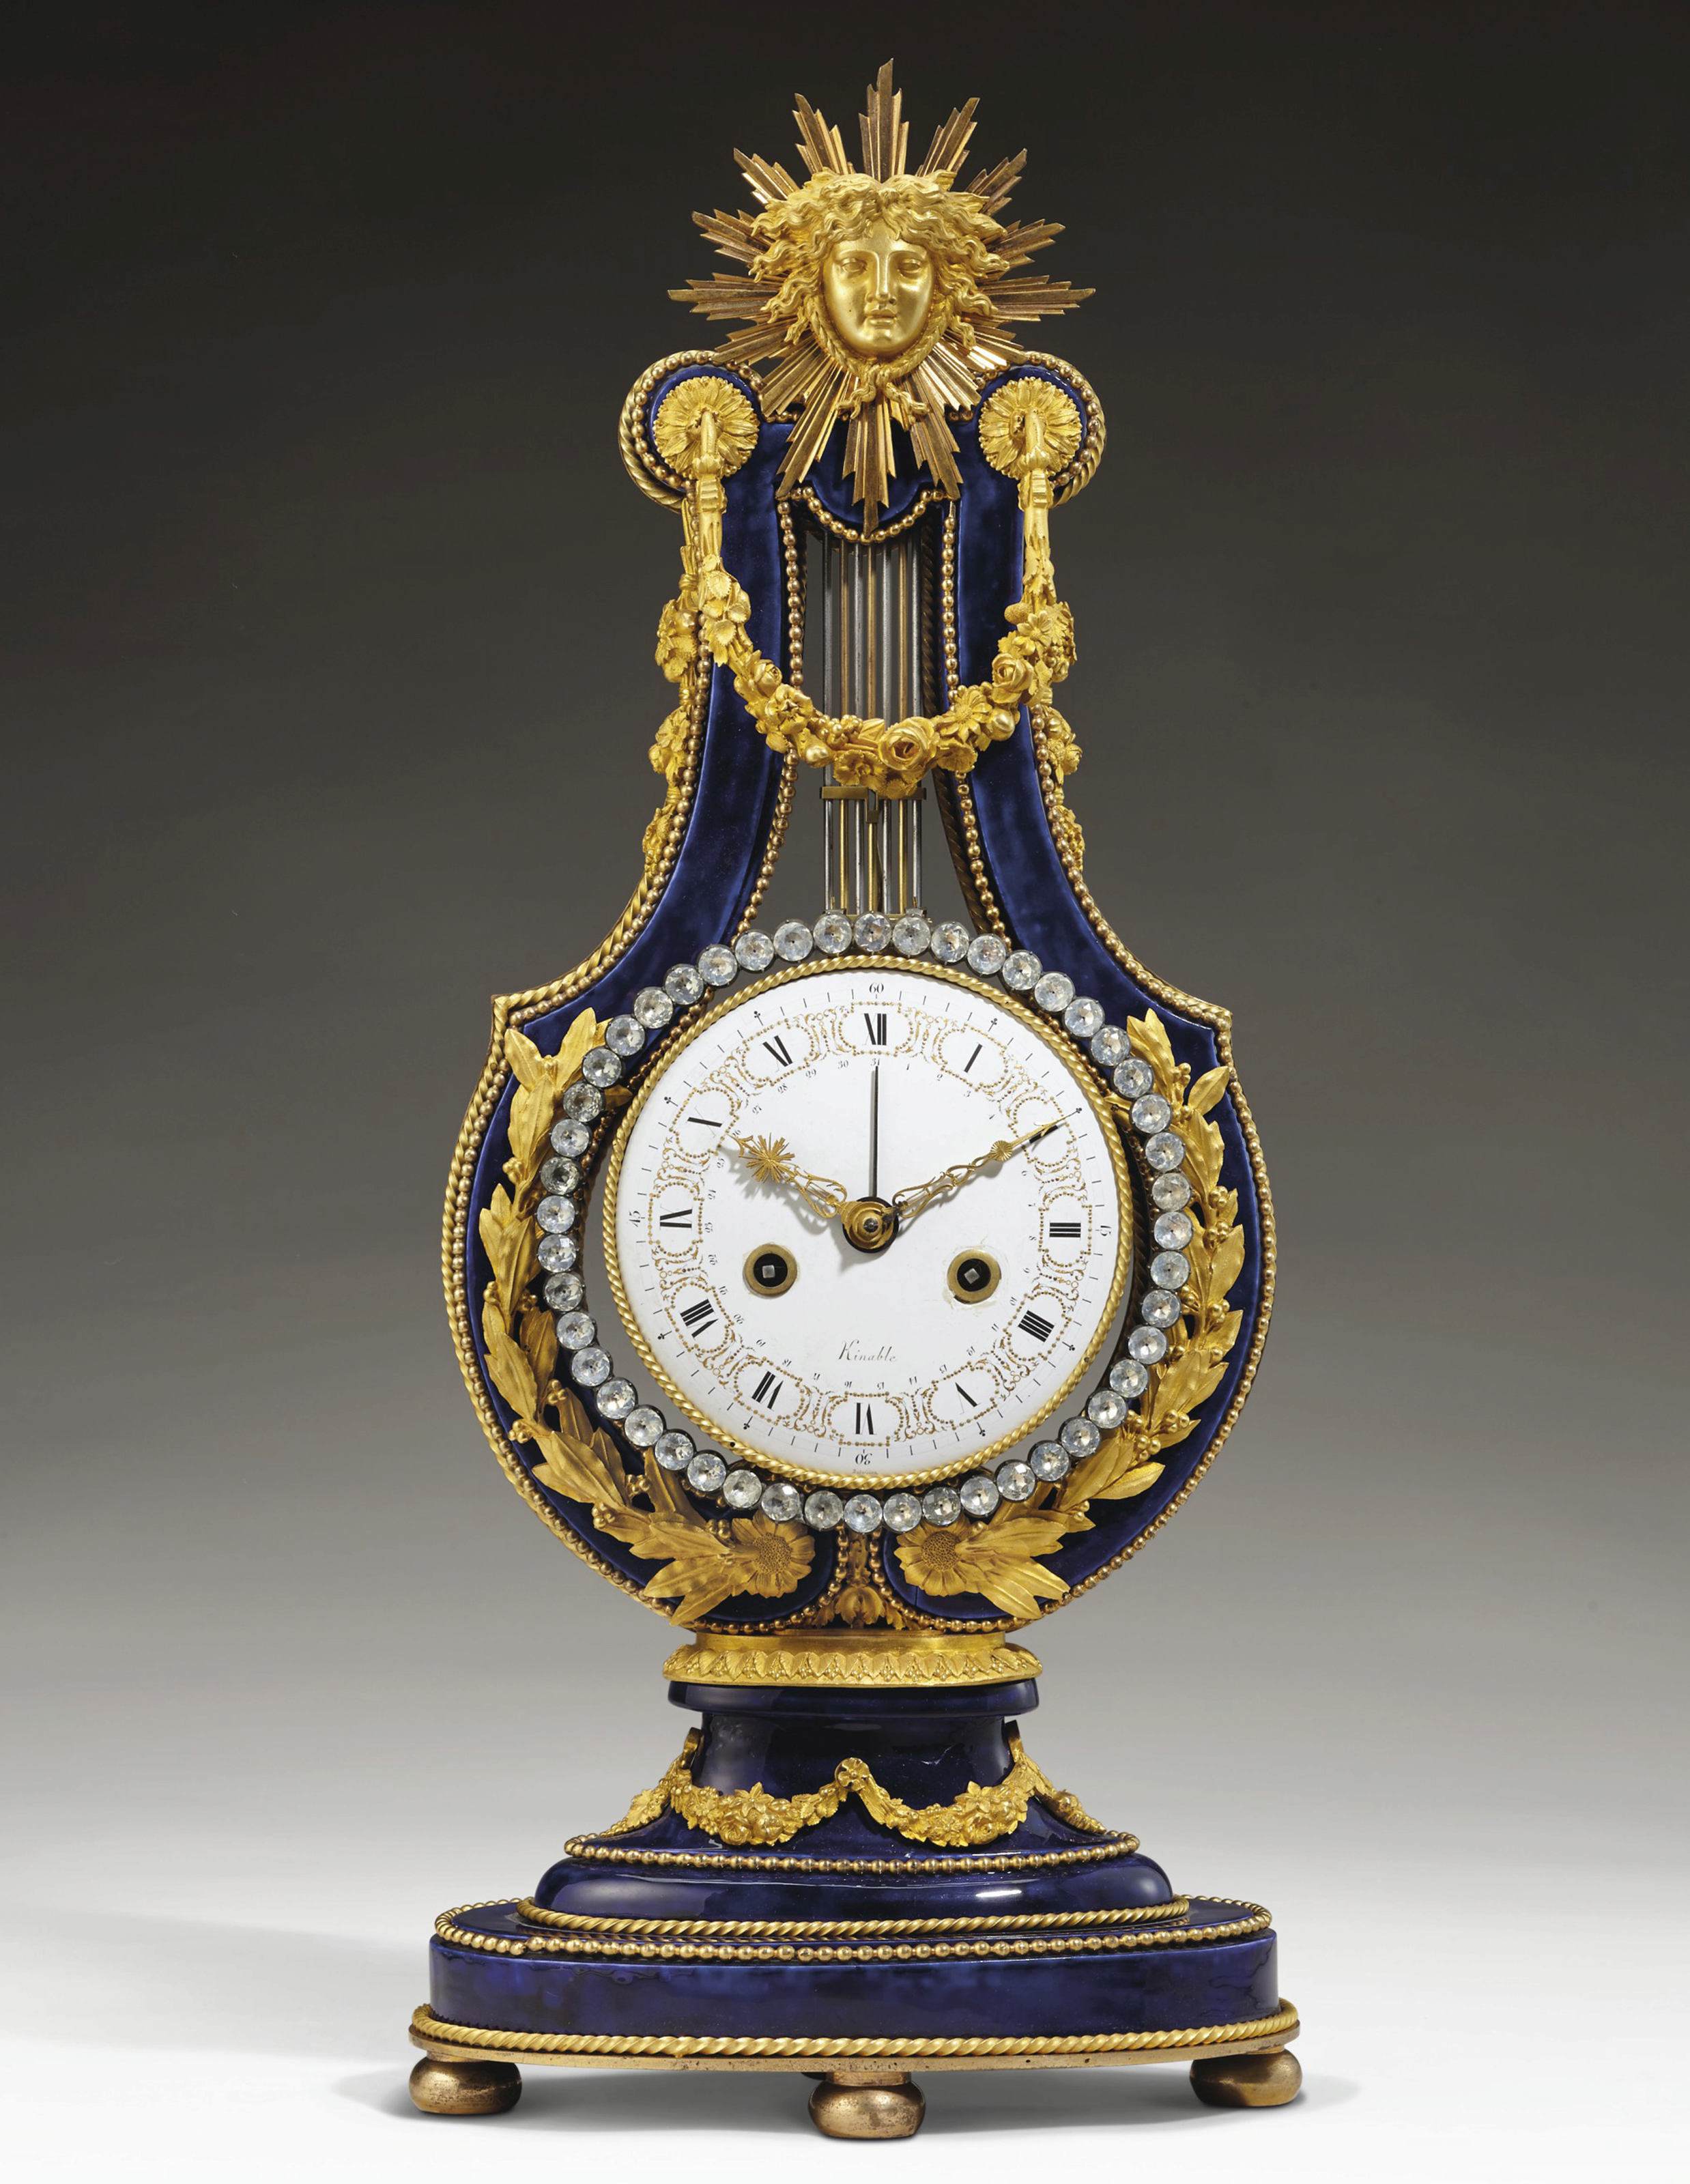 Horloges et pendules du XVIIIe siècle - Page 2 2020_n56